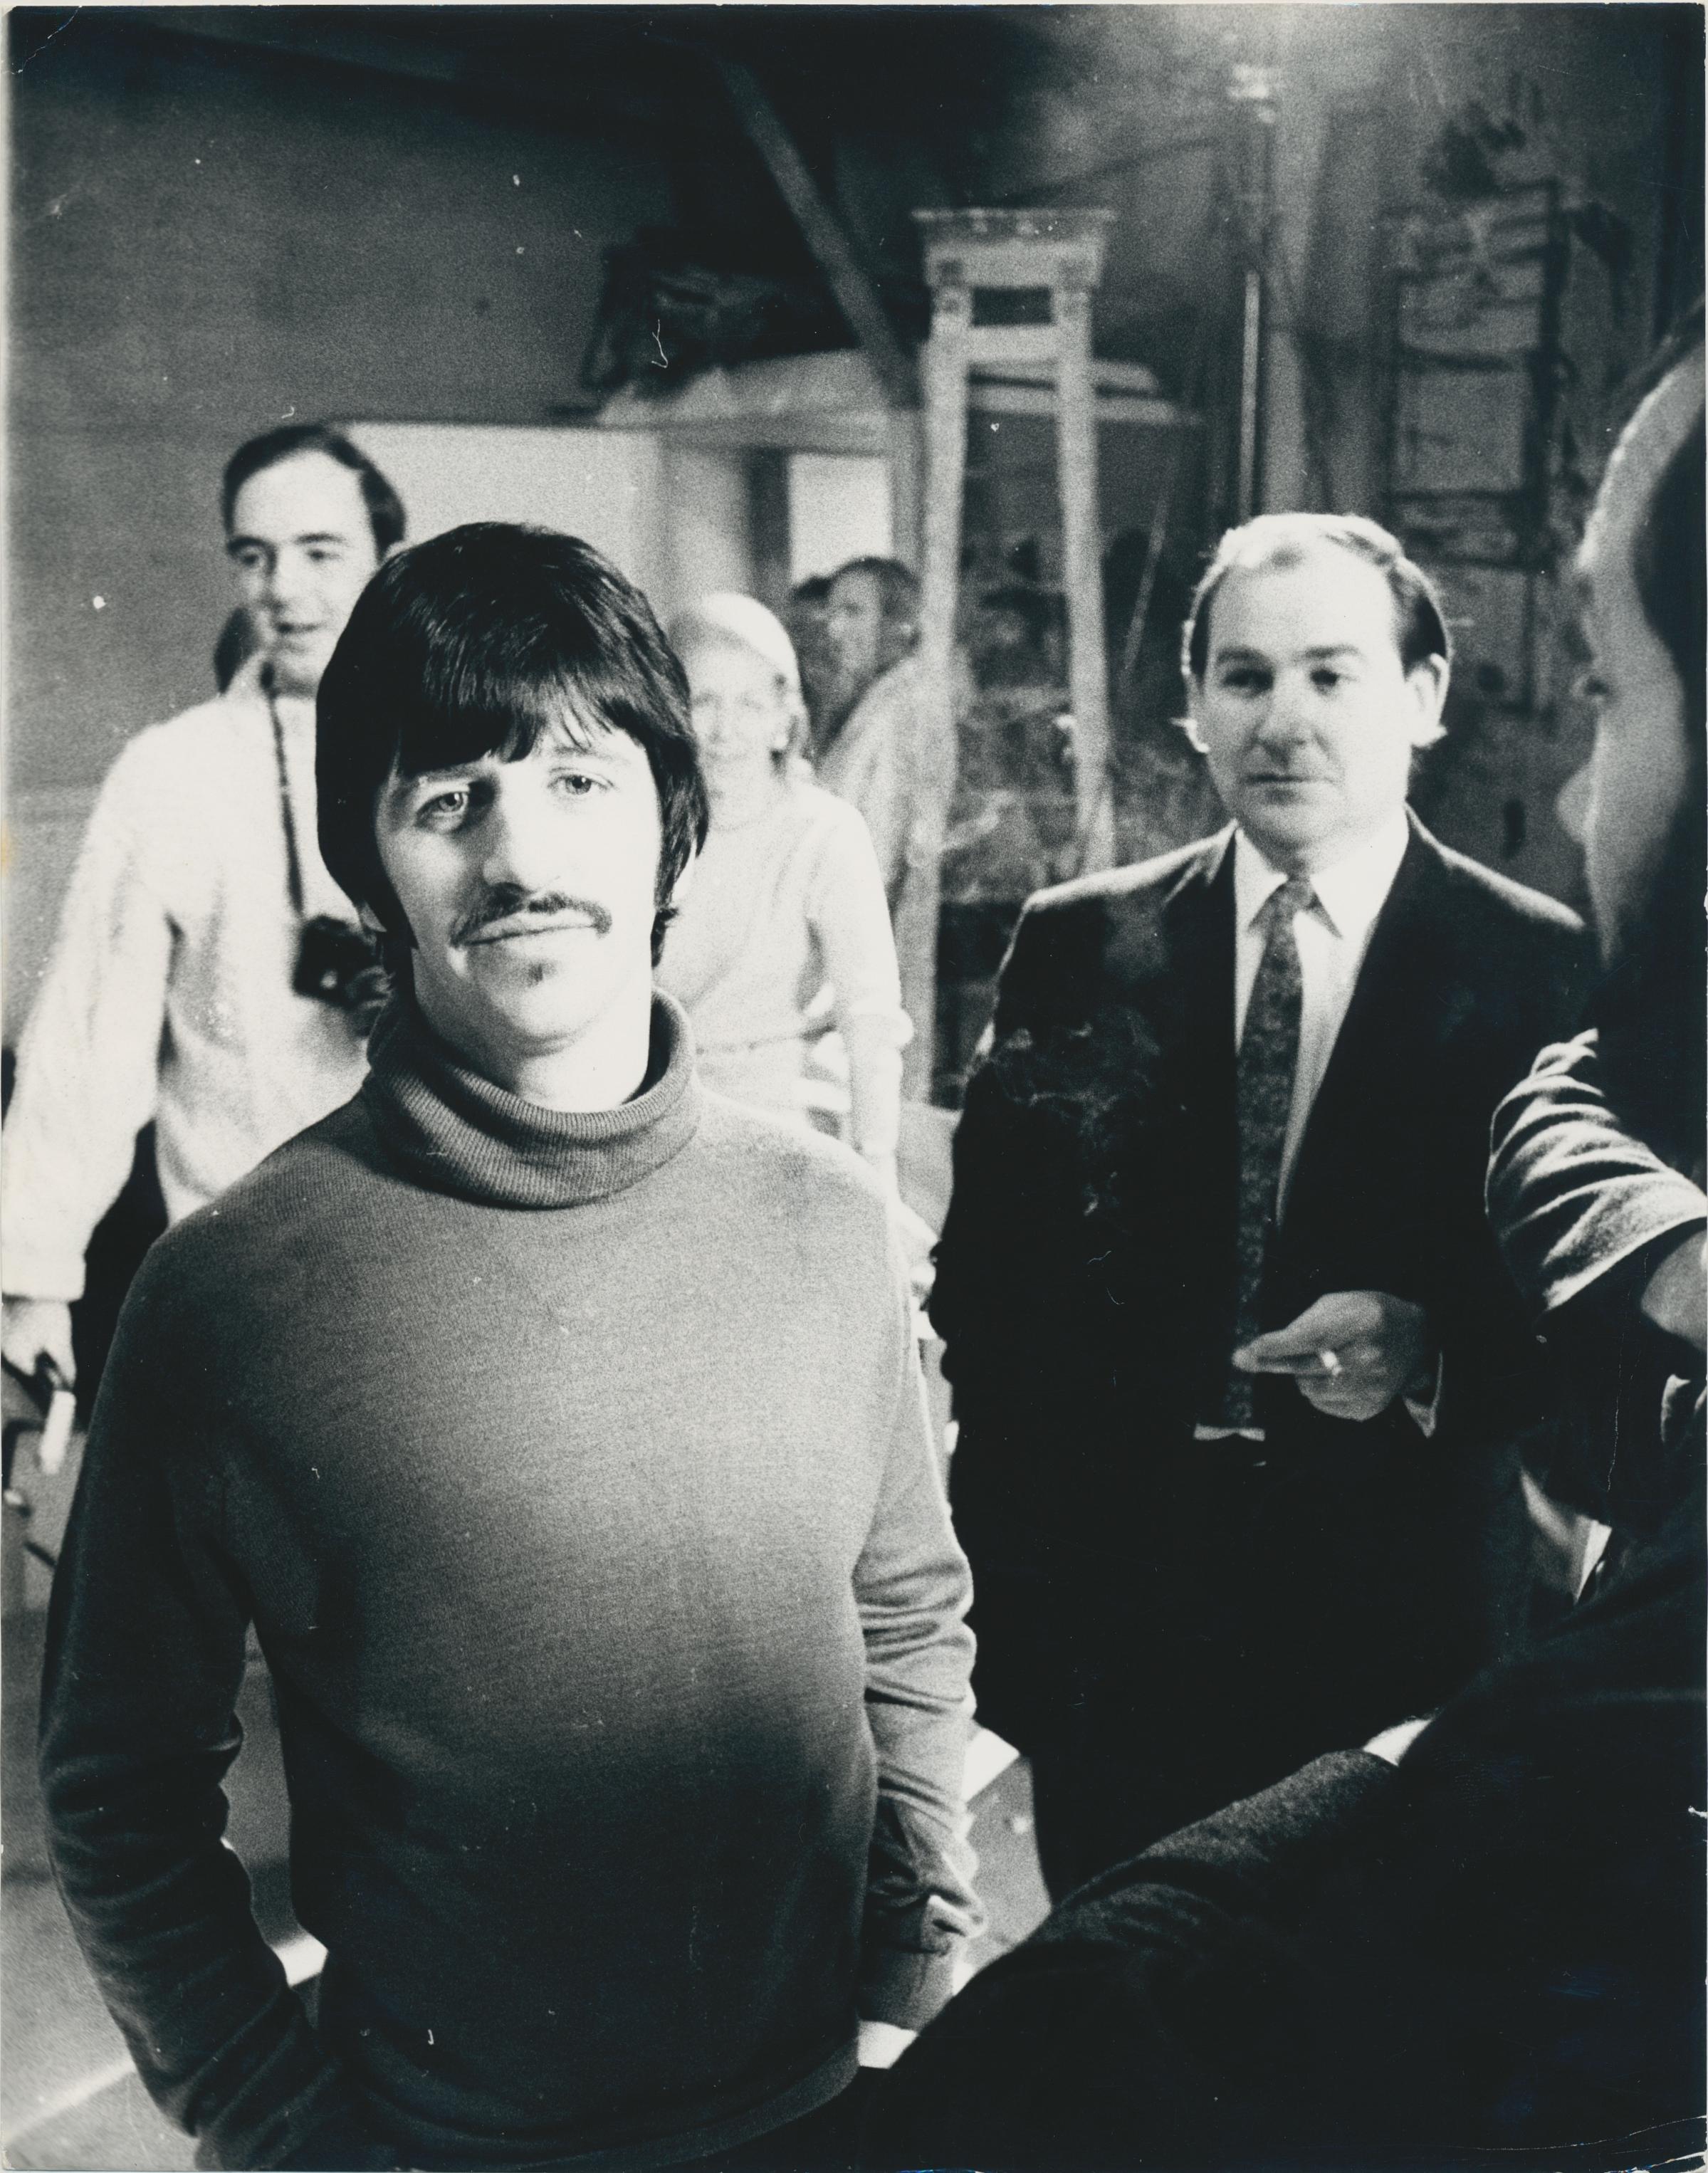 Martin Weaver Portrait Photograph - The Beatles, Ringo Starr, Black and White Photography, 1970s, 20, 8 x 20, 3 cm